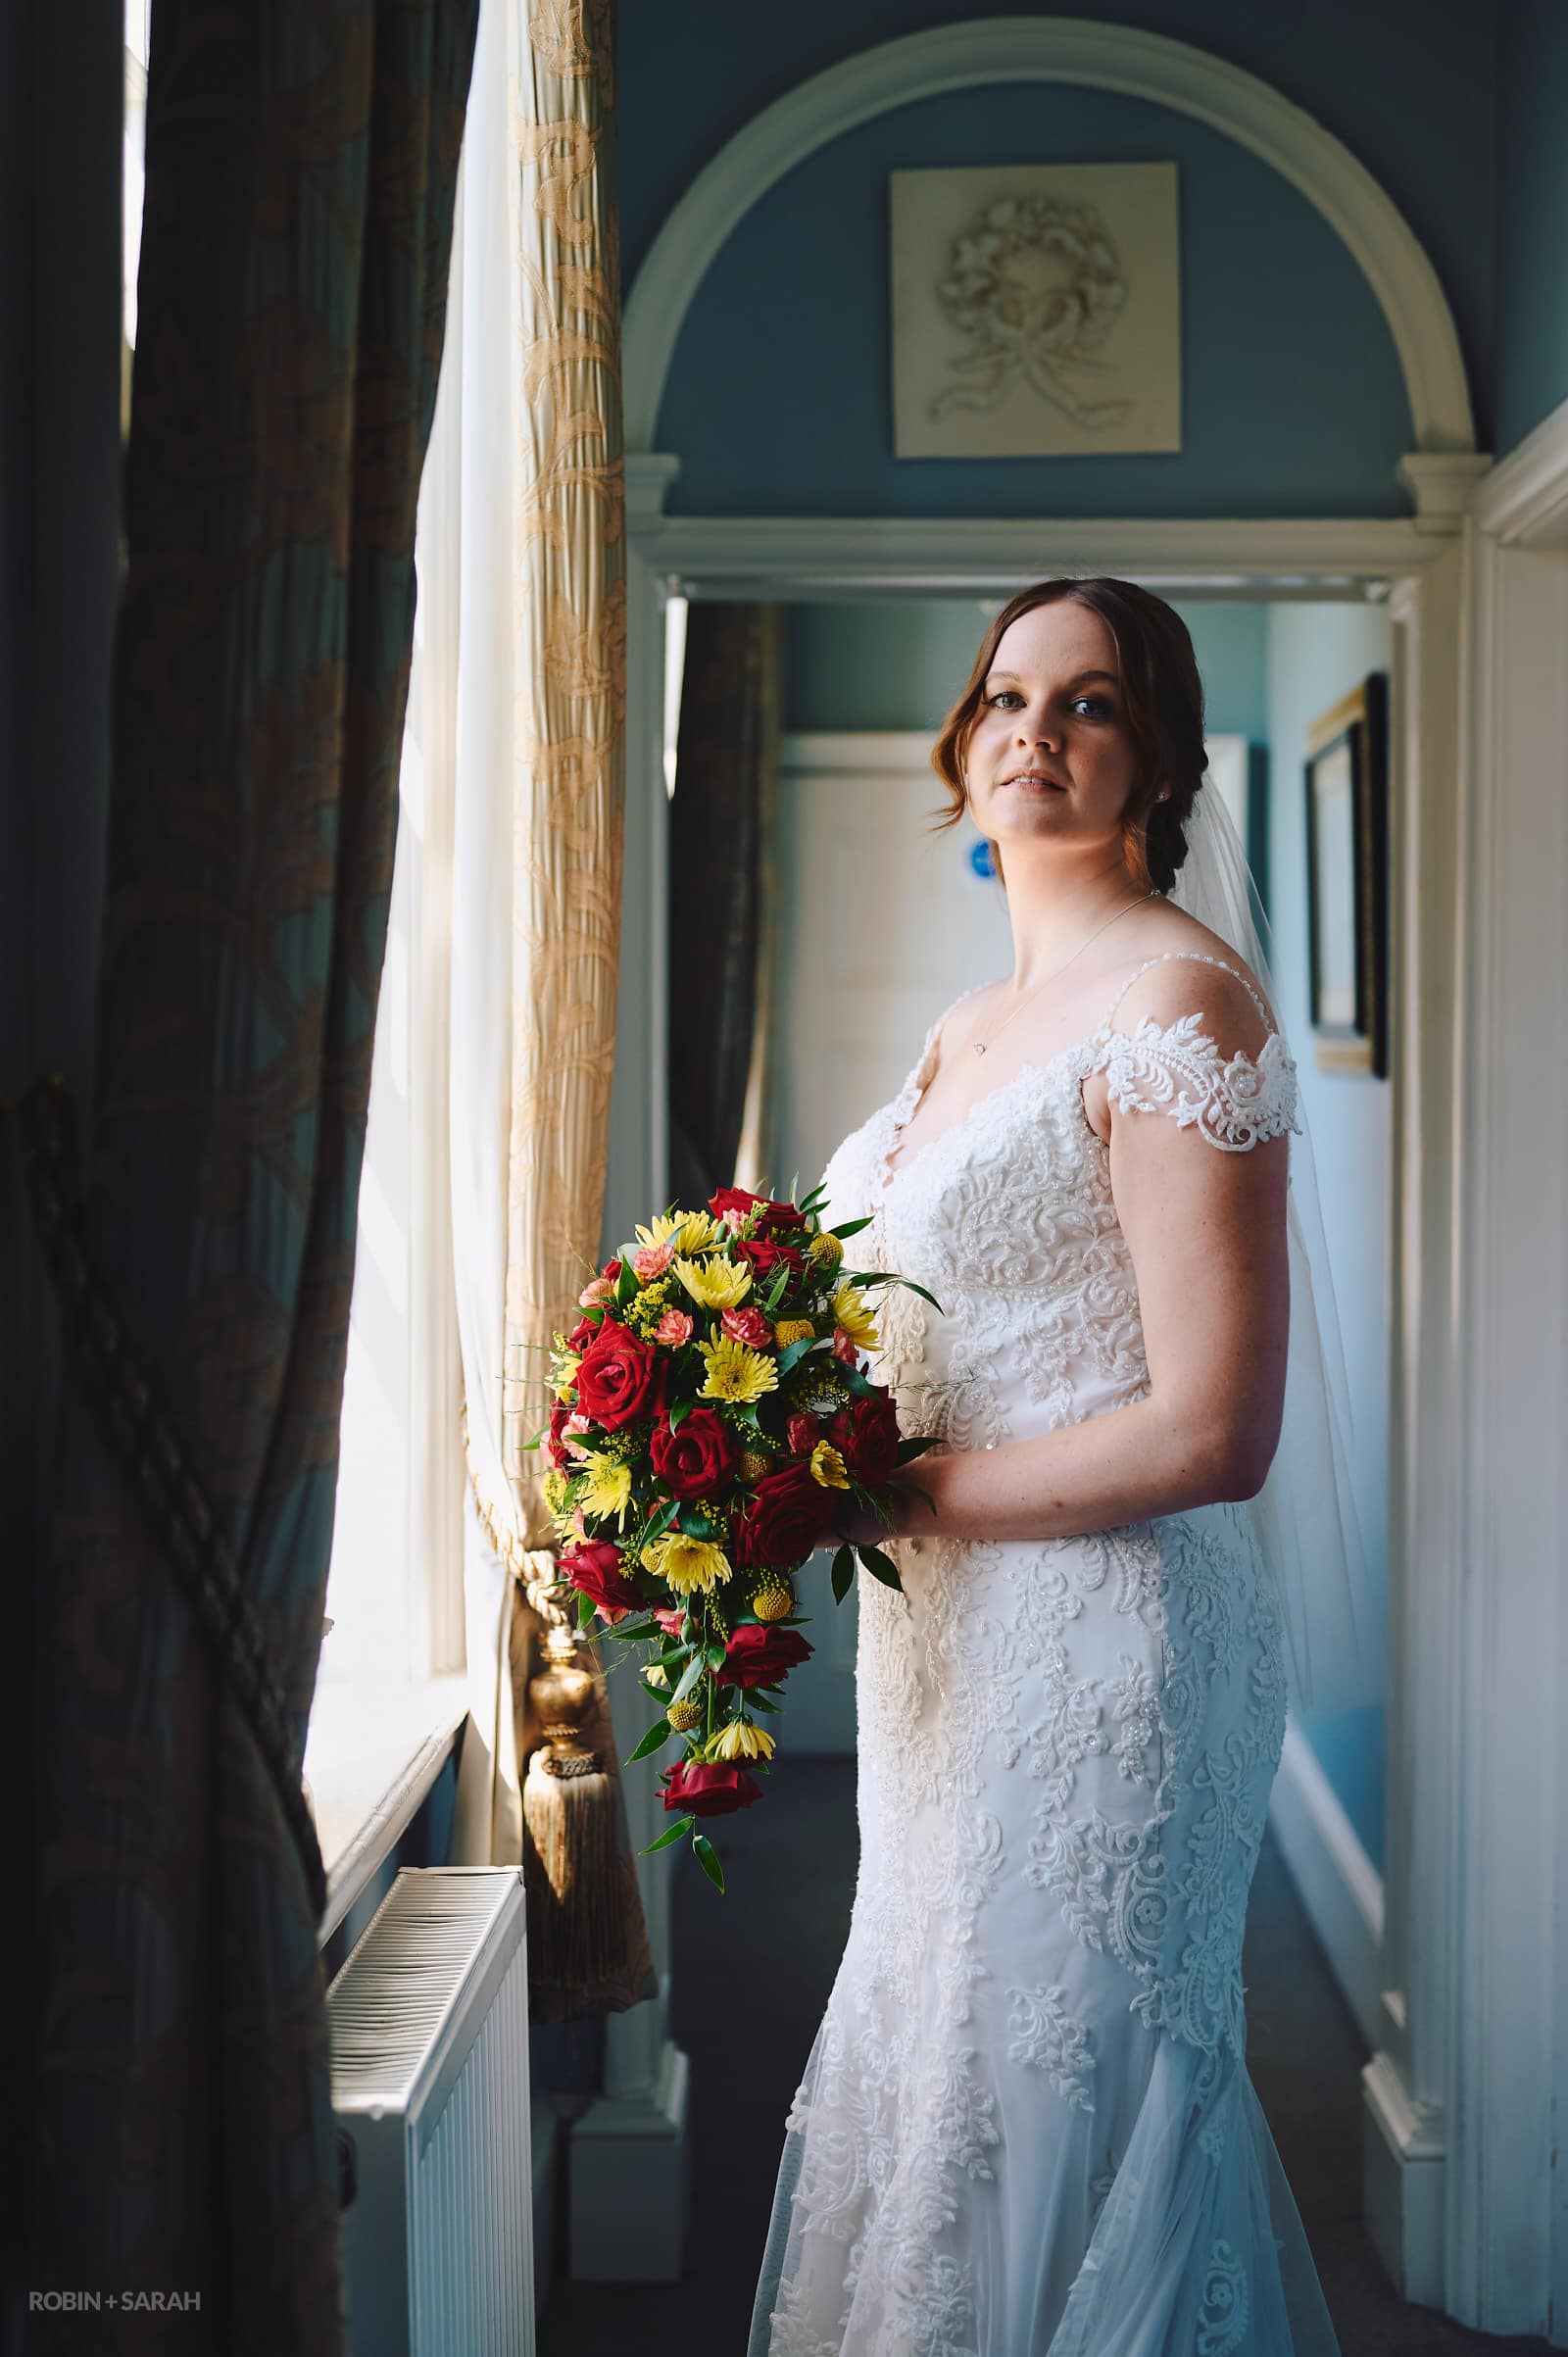 Portrait of bride in white wedding dress in hallway at Stanbrook Abbey